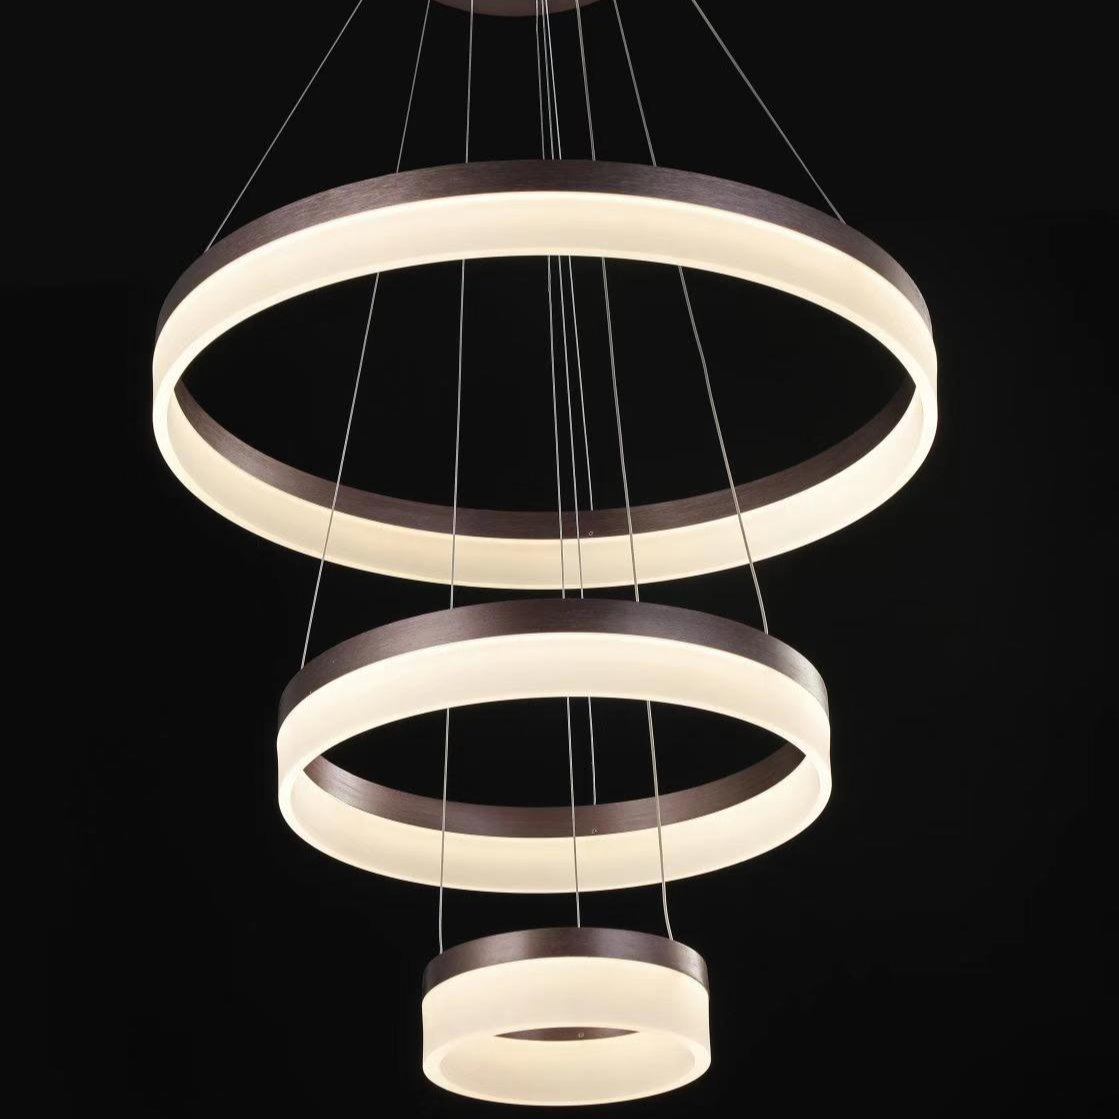 LED chanderlier simple decorative modern lamp